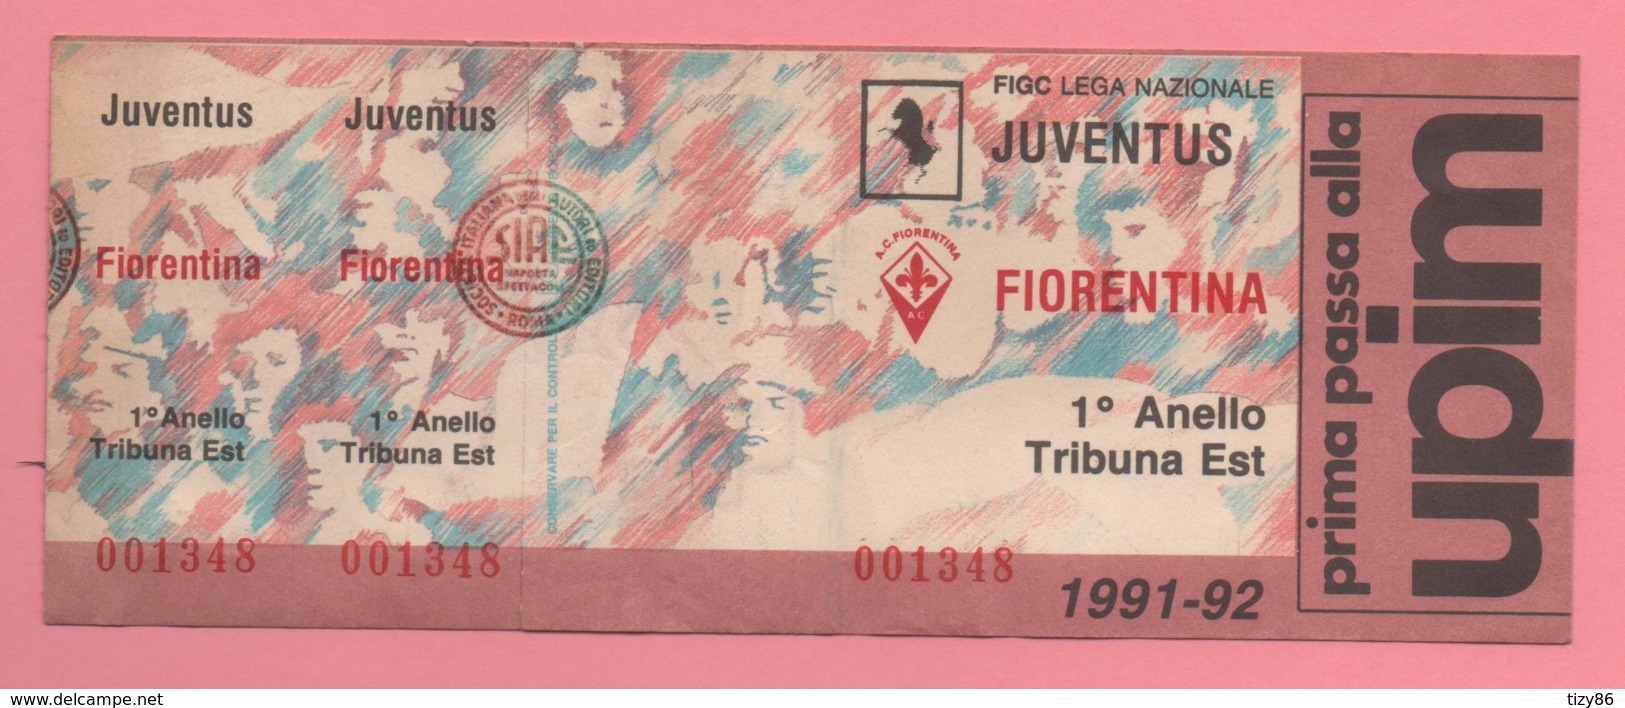 Biglietto D'ingresso Stadio Juventus Fiorentina 1991-92 - Biglietti D'ingresso